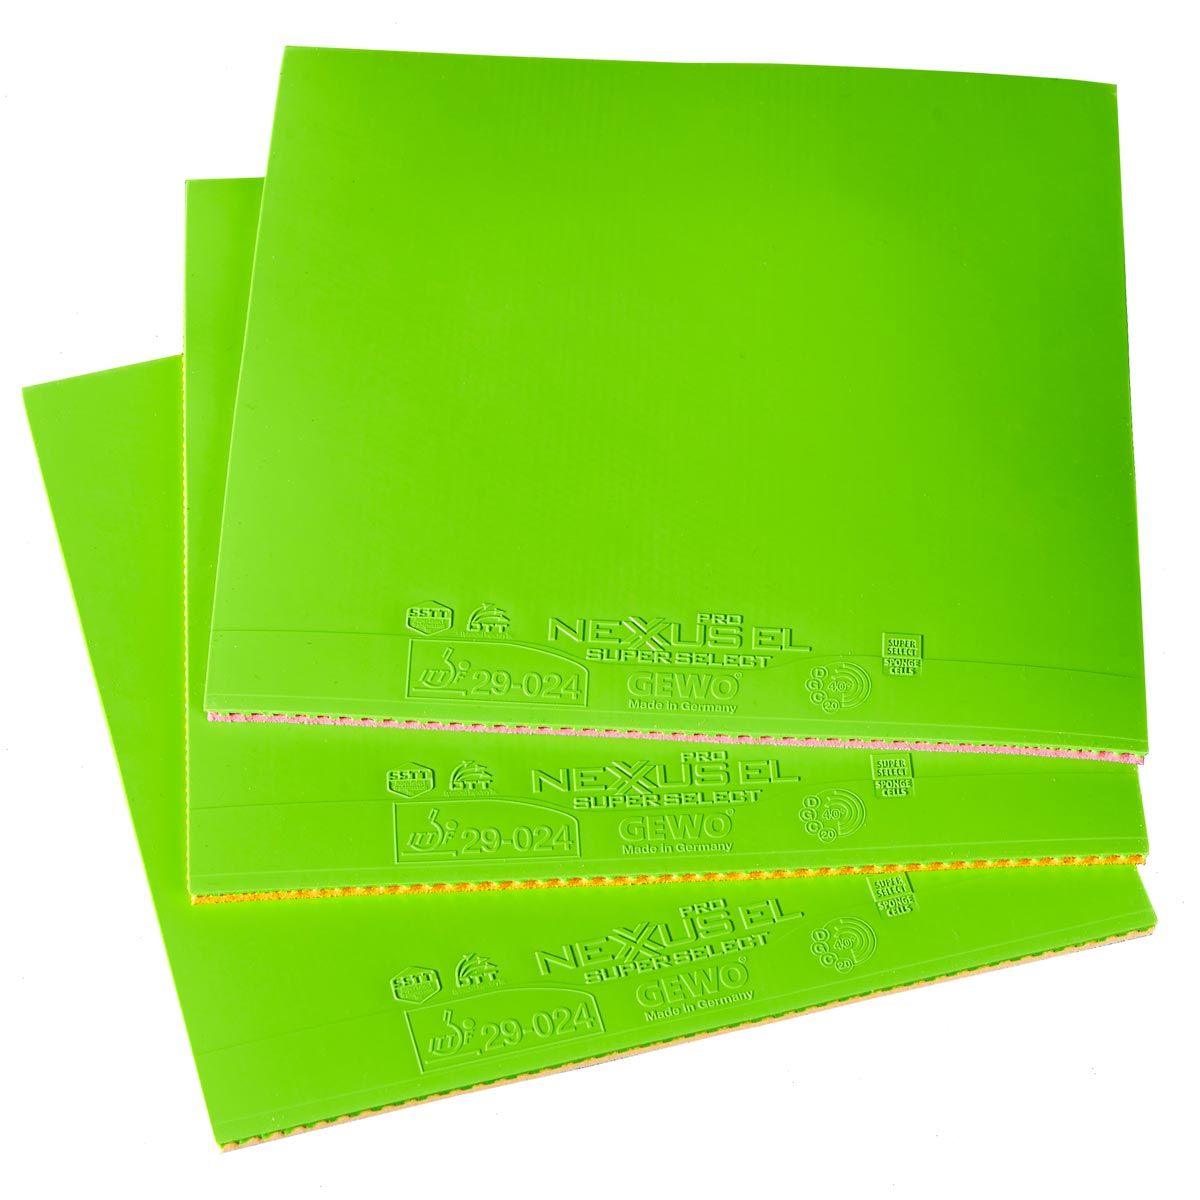 GEWO Belag Nexxus EL Pro 45 SuperSelect grün 2,0 mm